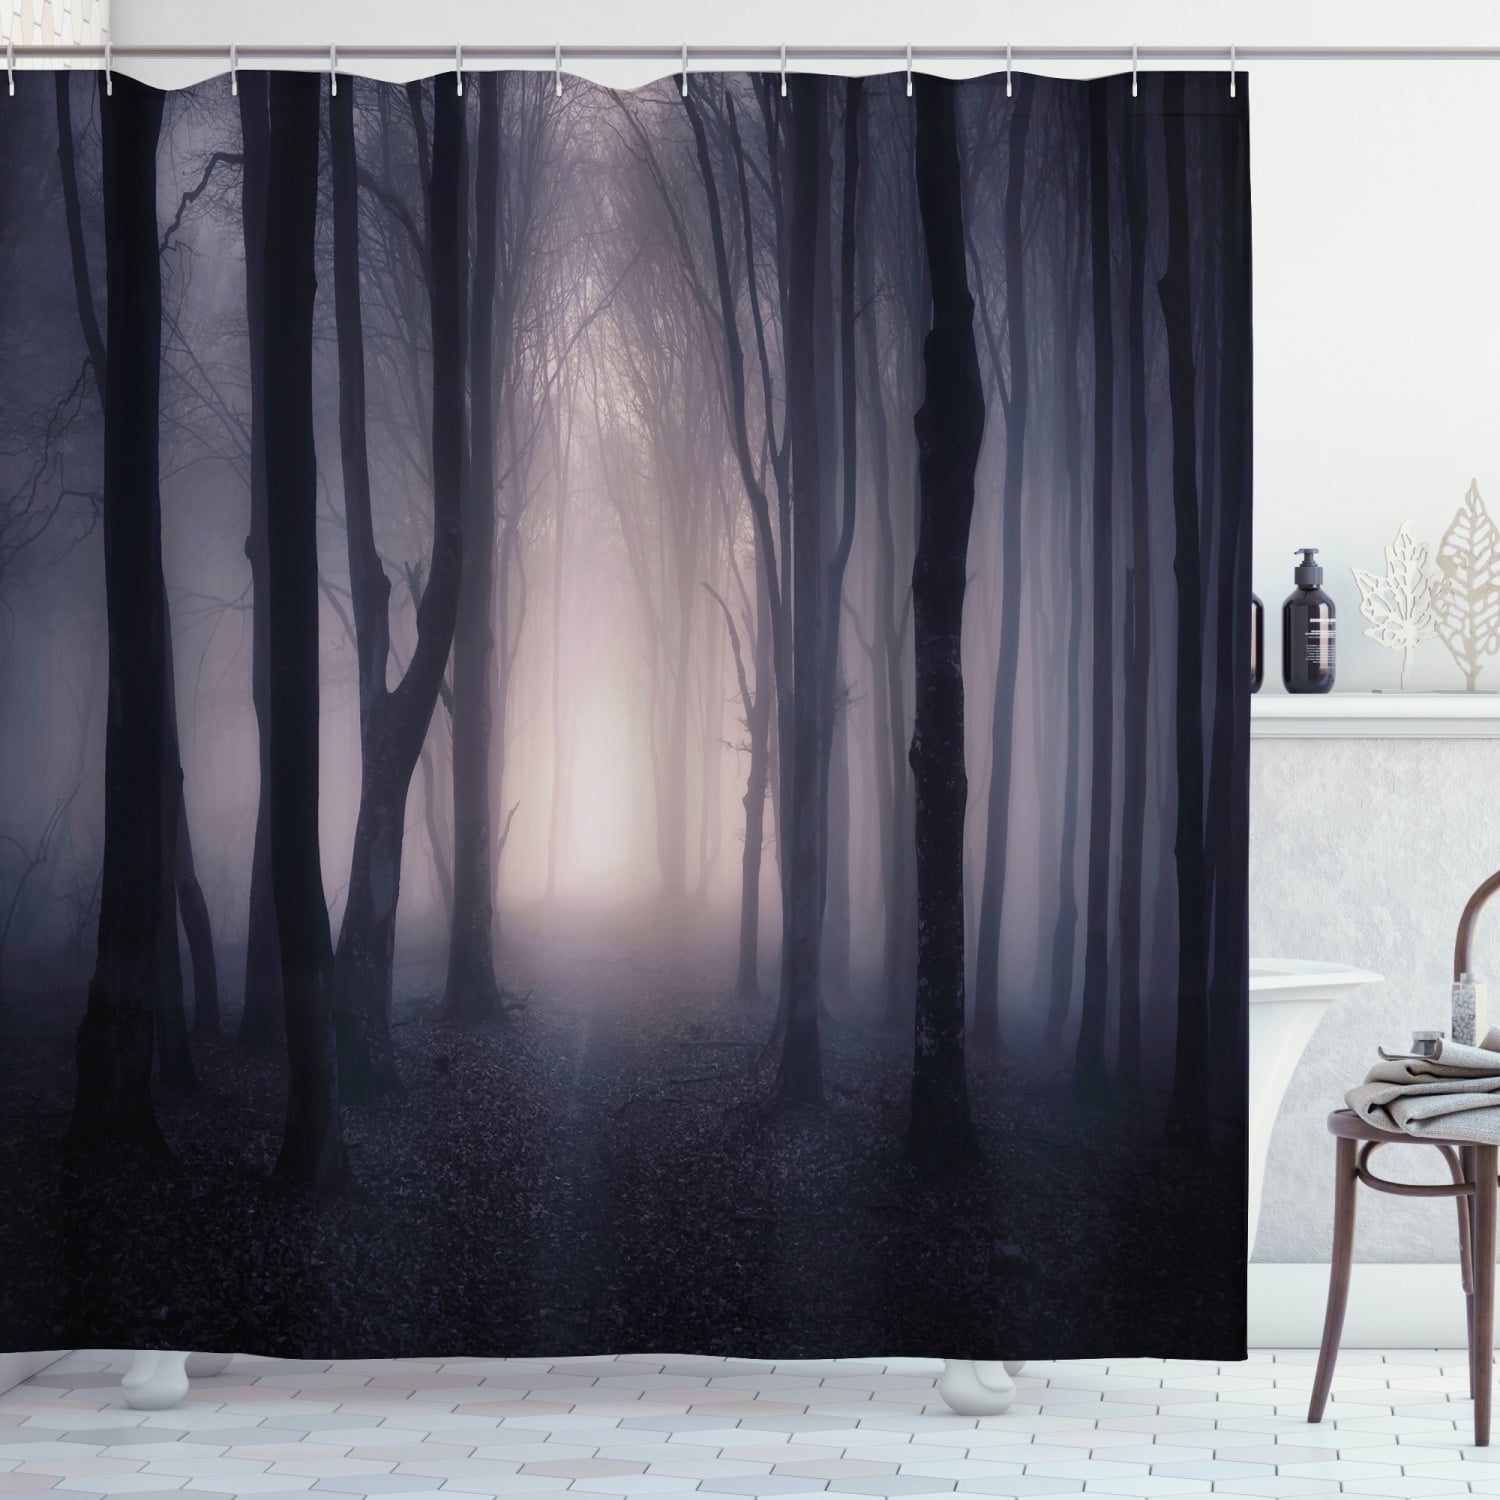 Waterproof Fabric Horror Forest Shower Curtain Halloween Night Bathroom Hooks